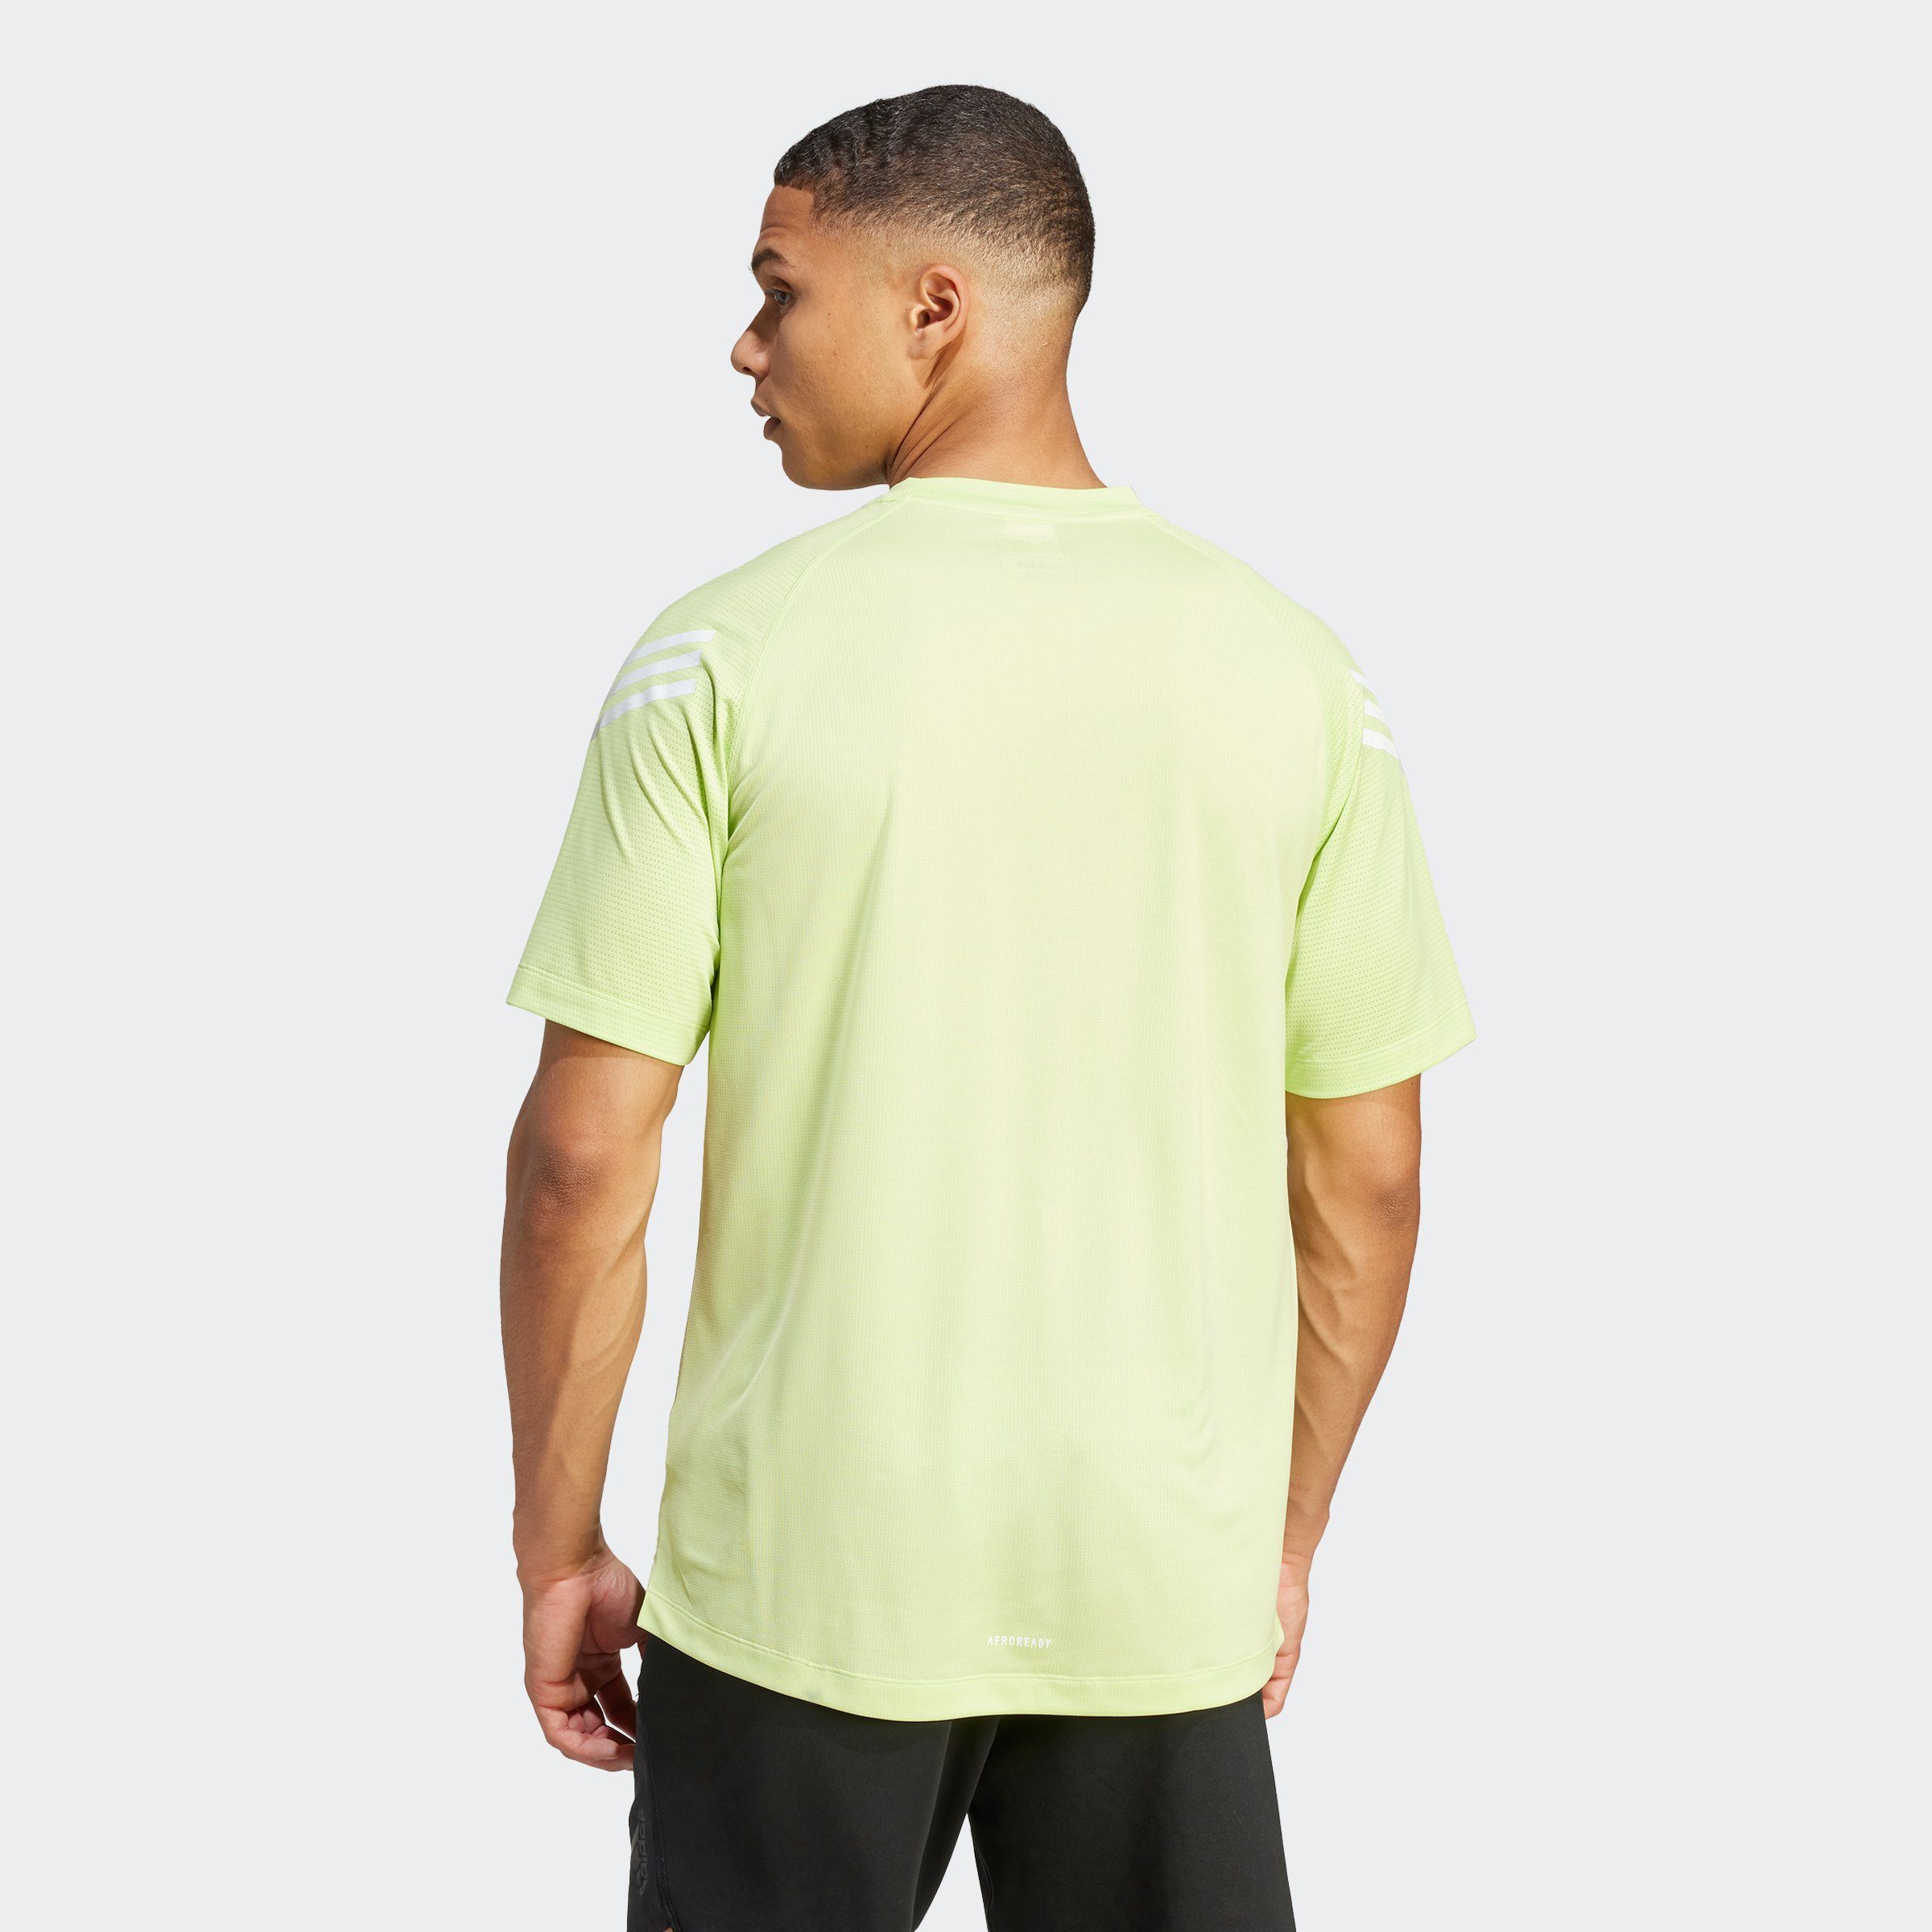 Pebble ICONS Silver TRAINING Performance T-Shirt / TRAIN adidas Lime / Pulse White 3-STREIFEN